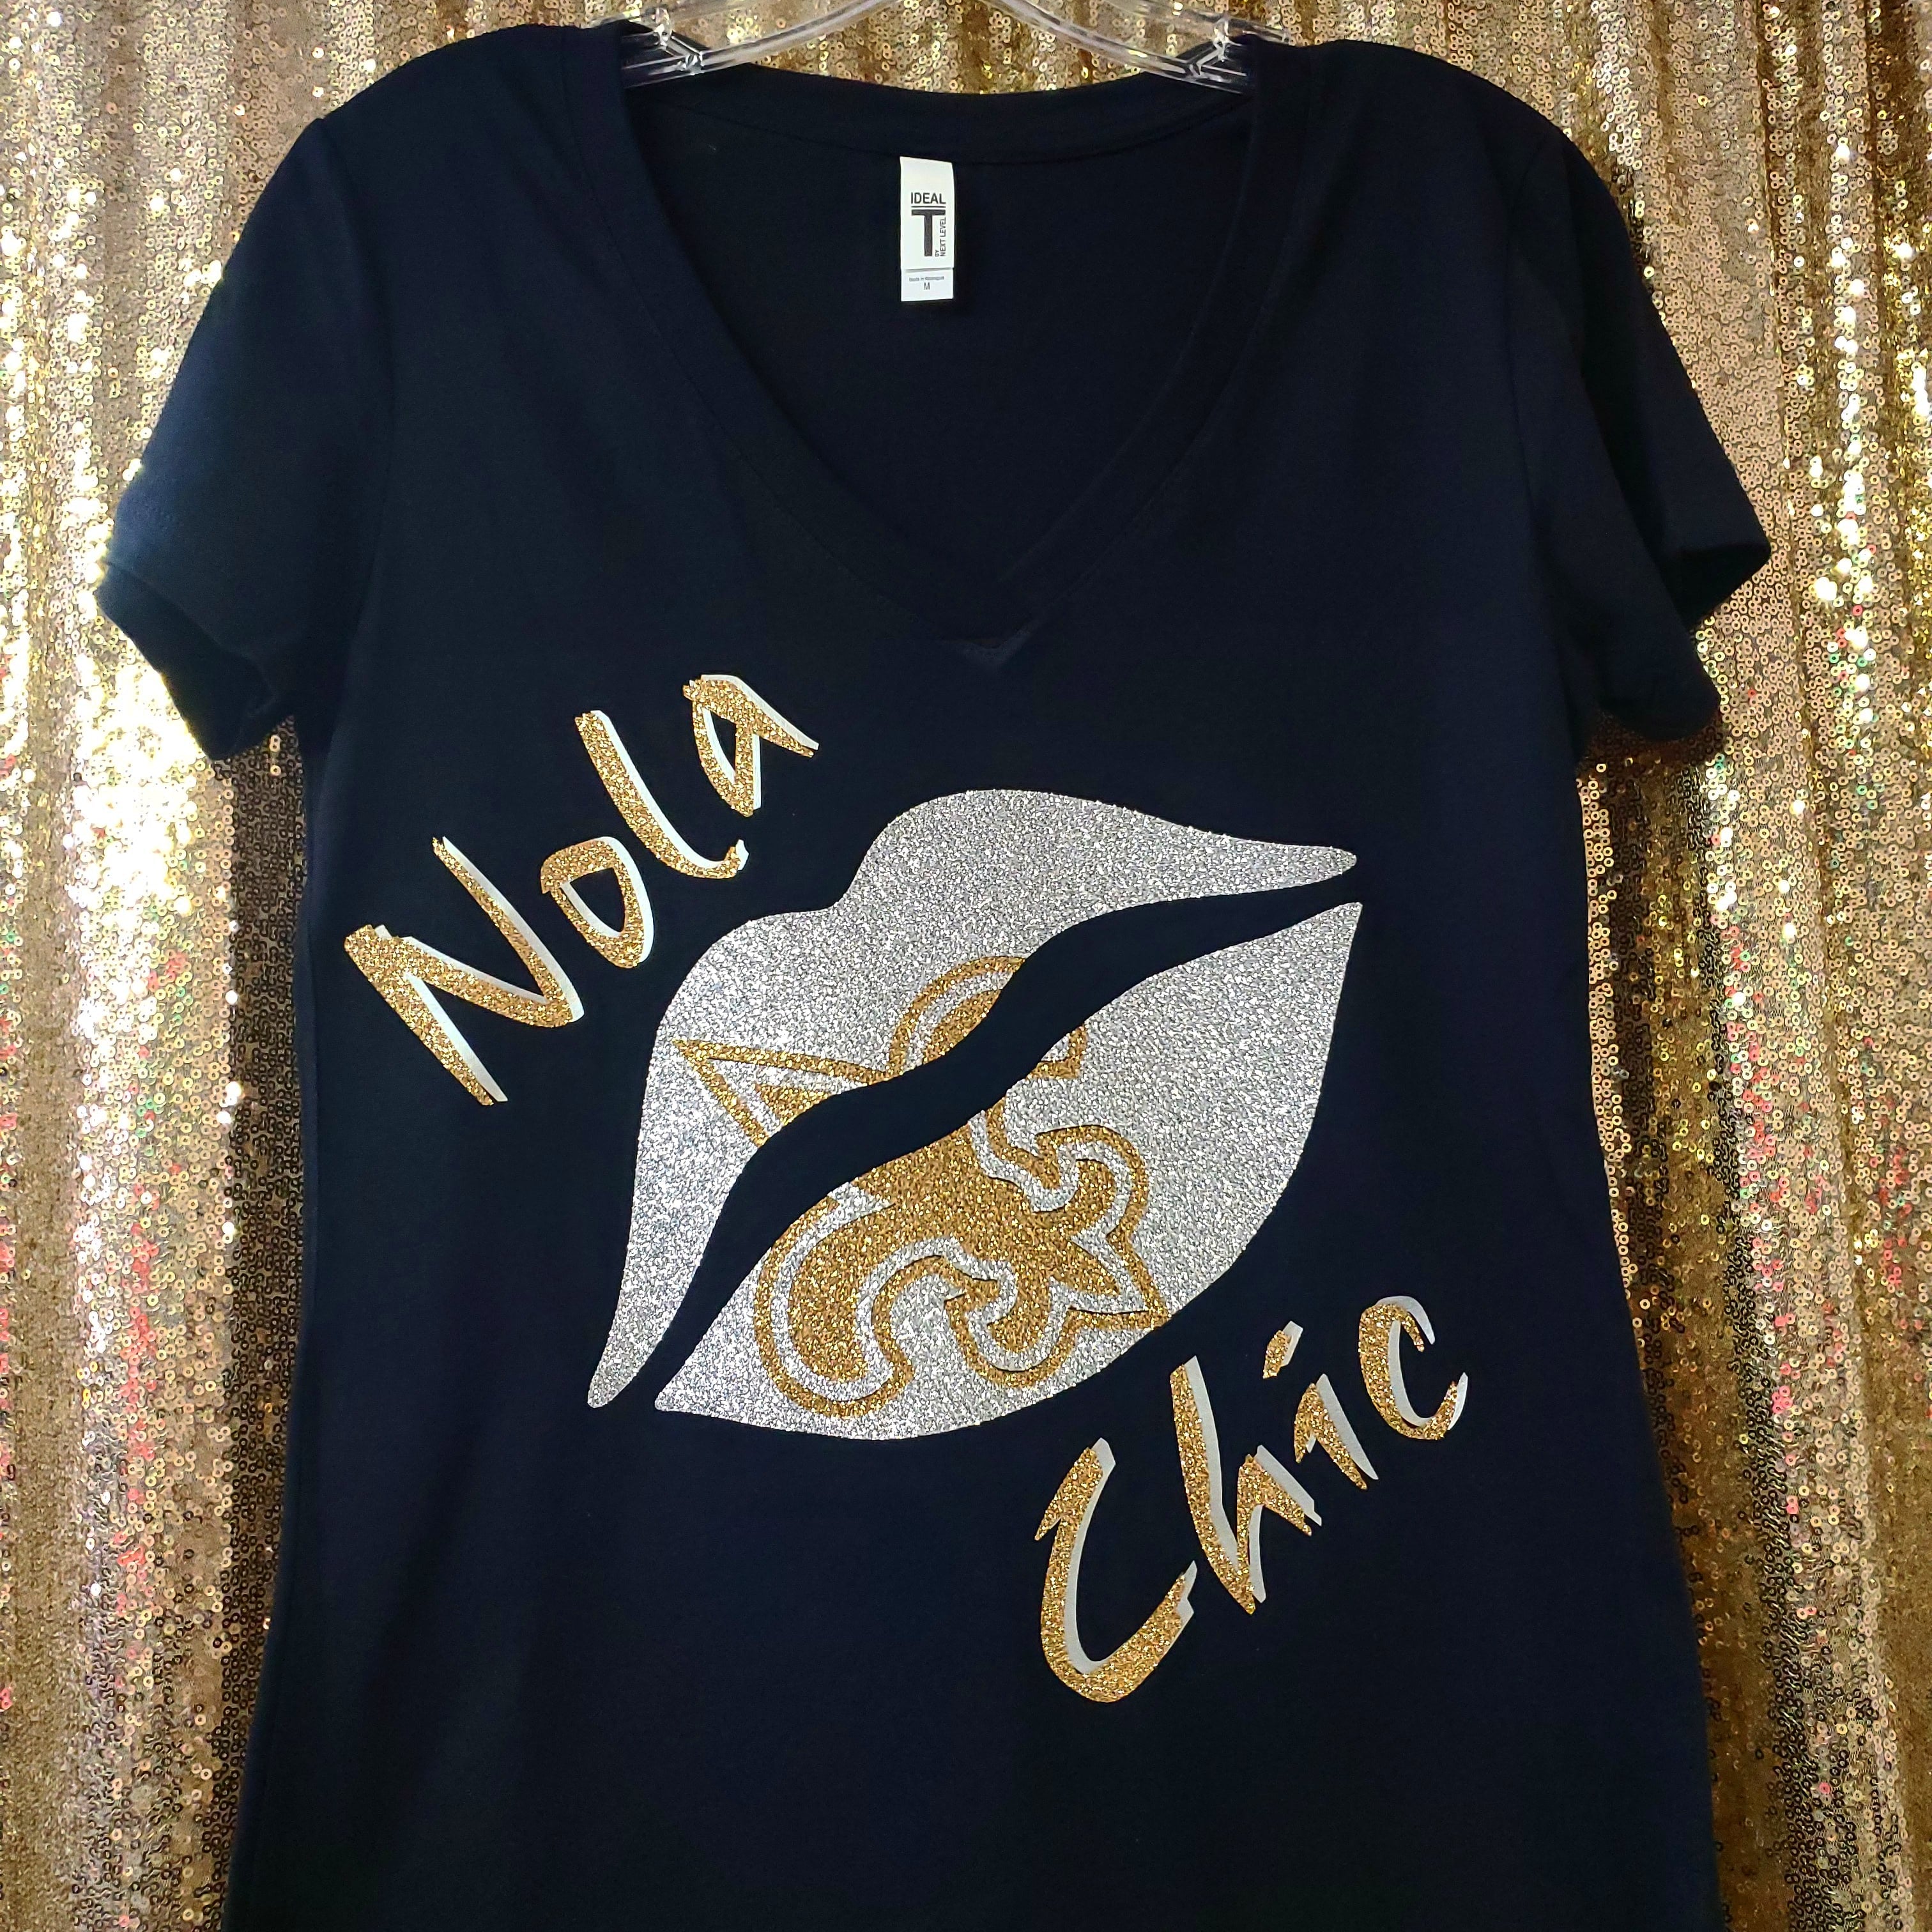 #Nola Chic shirts (silver n gold)